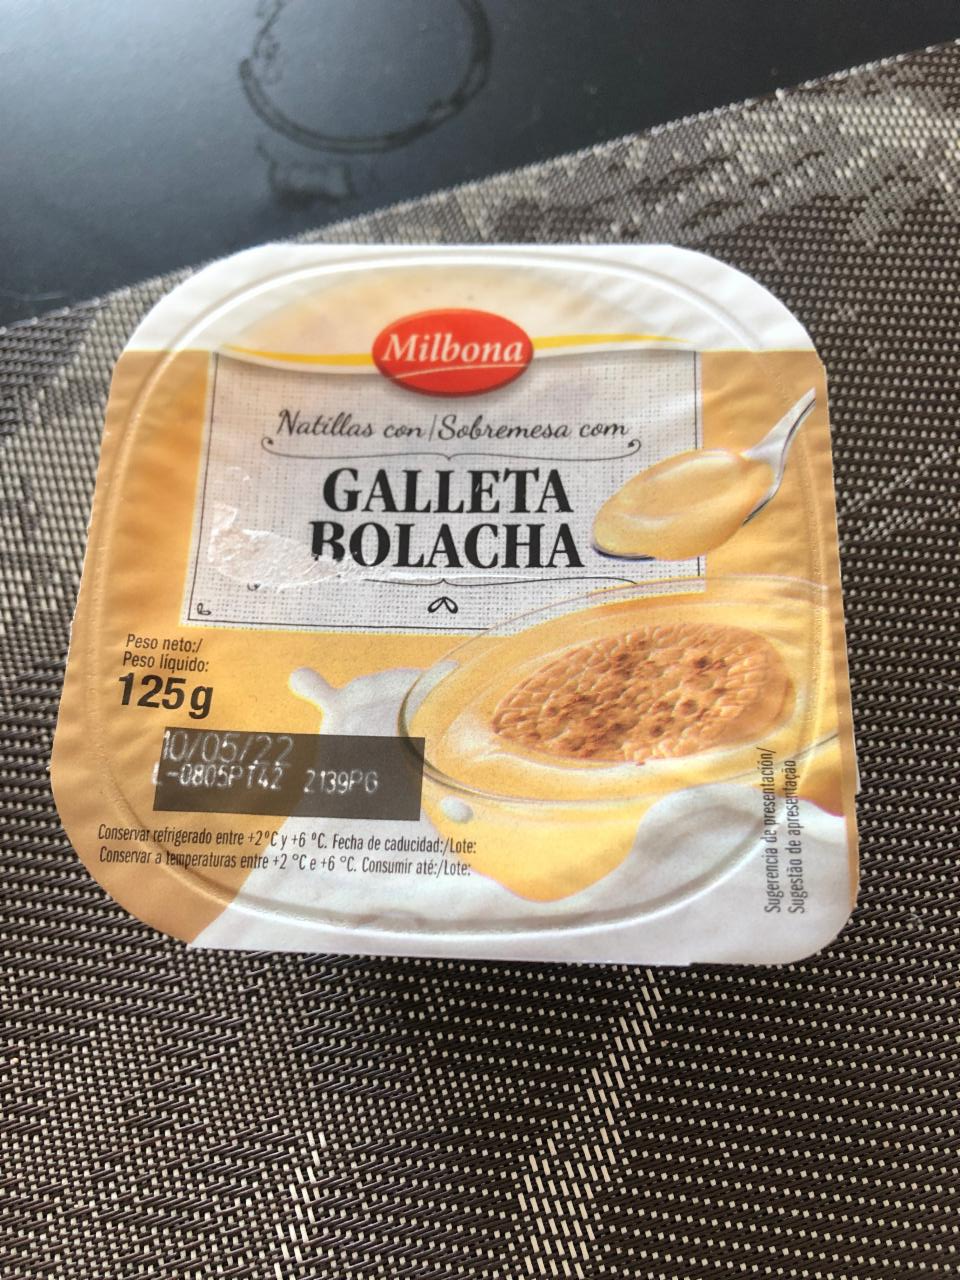 Фото - йогурт с печеньем Galleta Bolacha Milbona